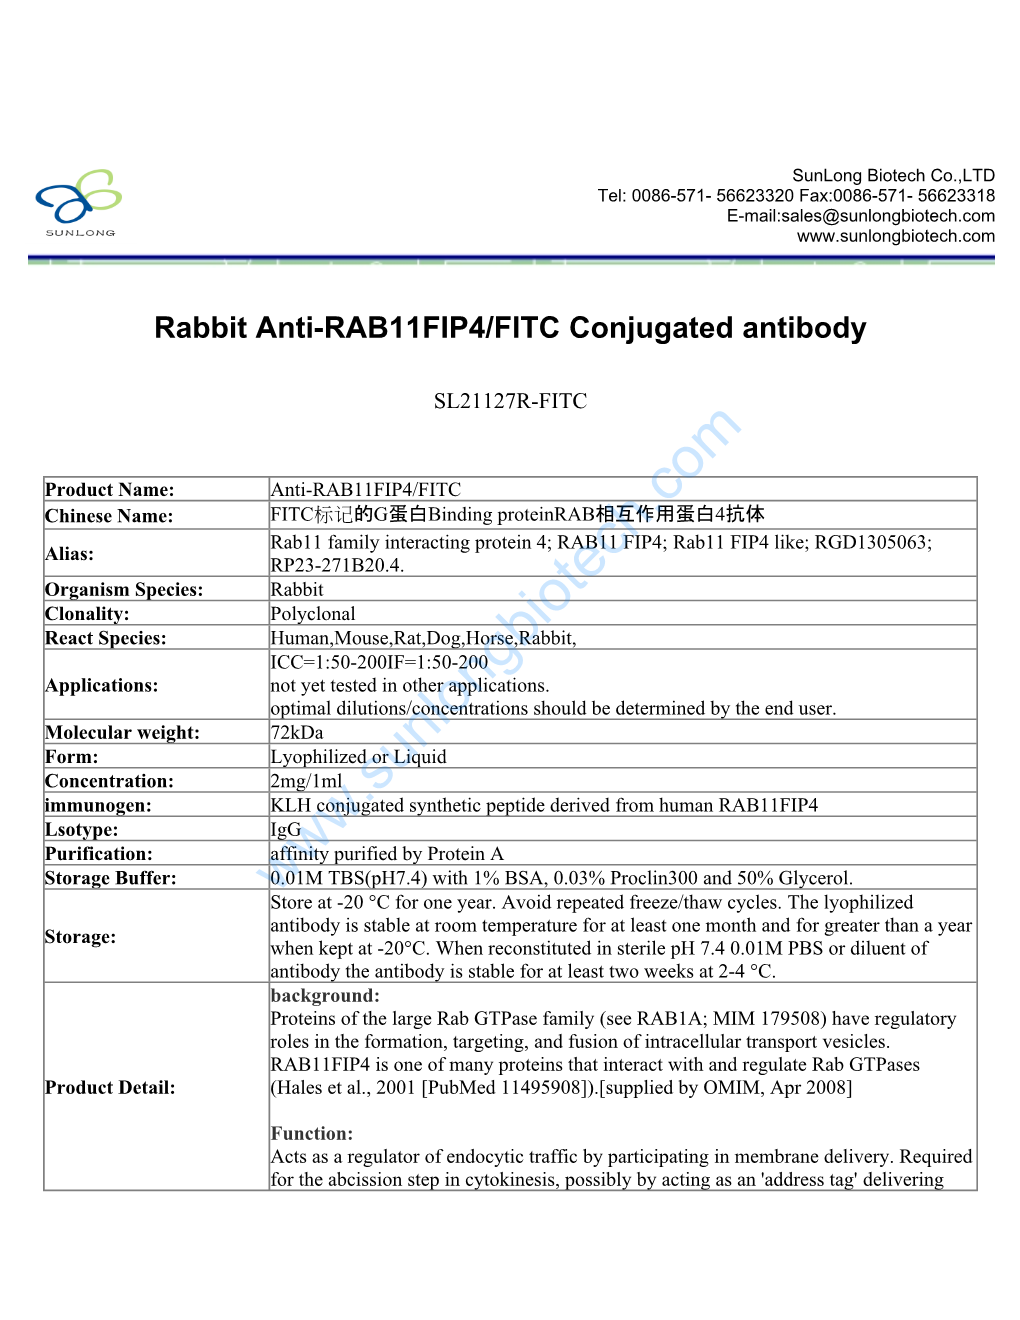 Rabbit Anti-RAB11FIP4/FITC Conjugated Antibody